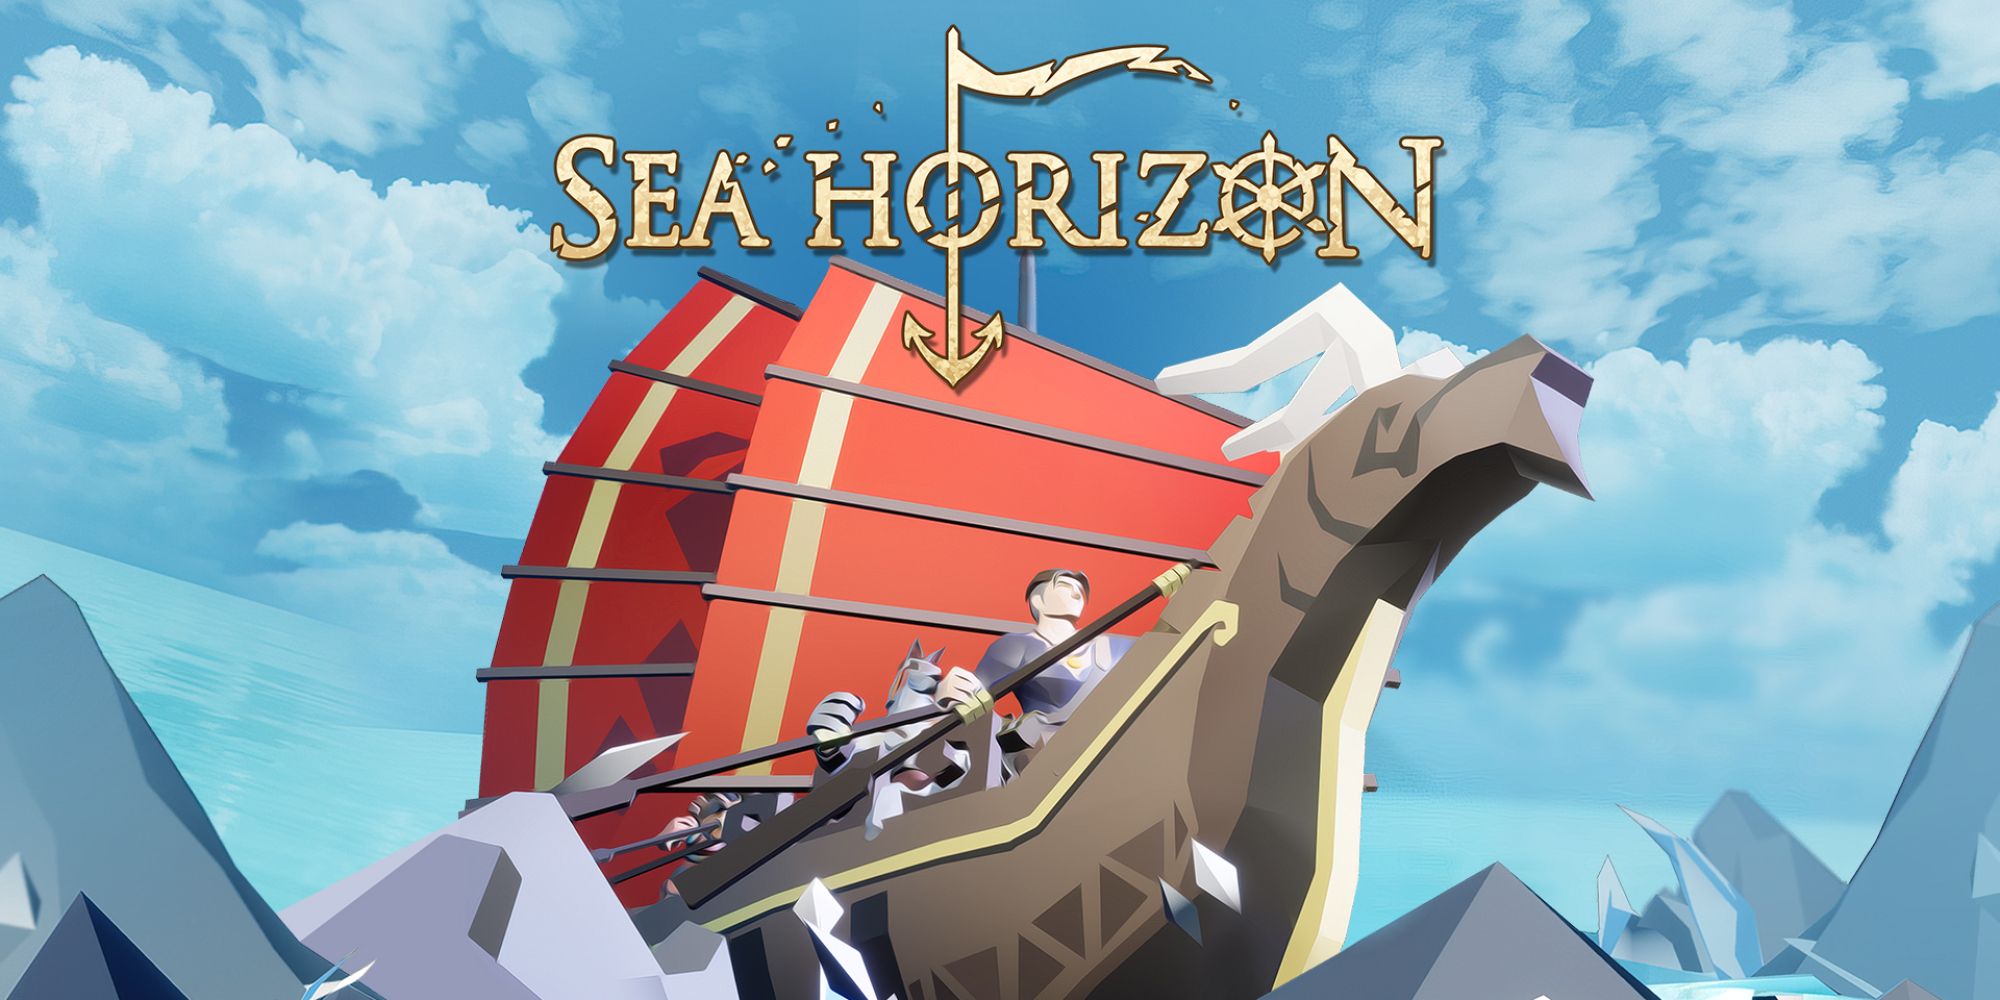 Sea Horizon Review key art and game title